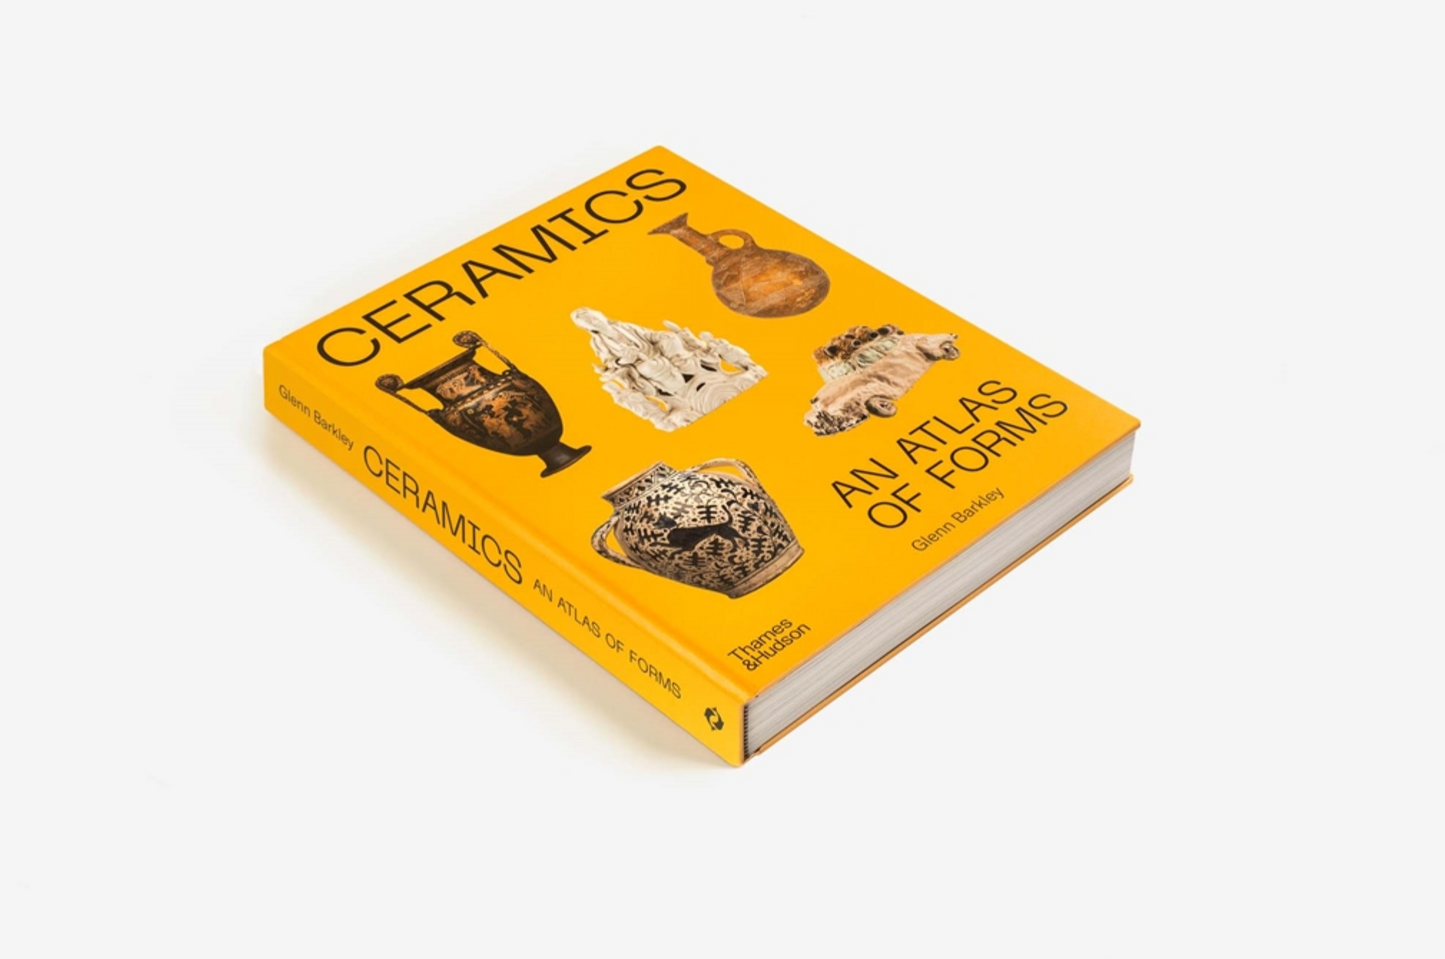 Ceramics; An Atlas of Forms by Glenn Barkley